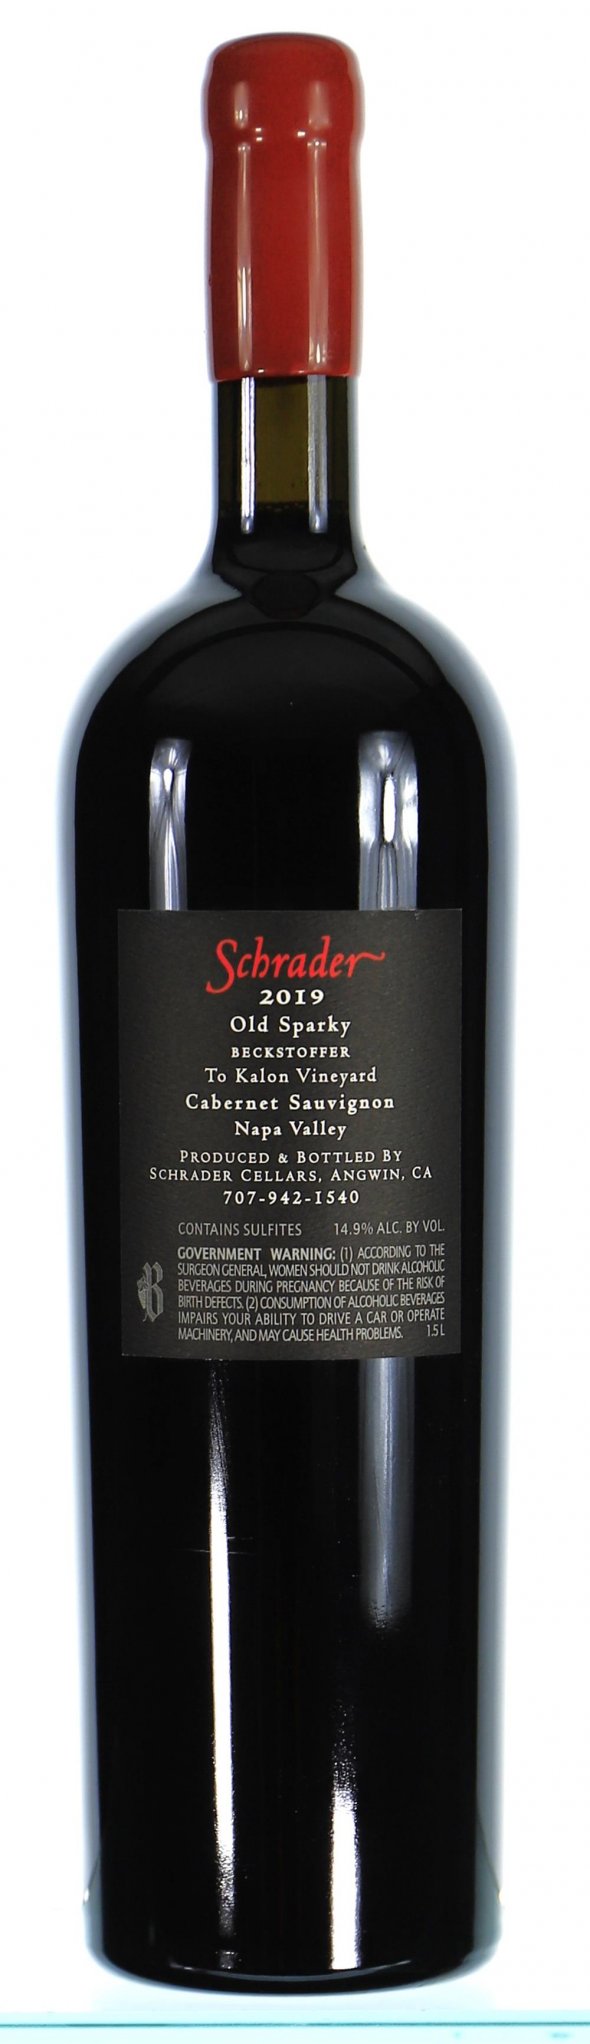 Schrader, Old Sparky Cabernet Sauvignon, Napa Valley (Magnum) - In Bond